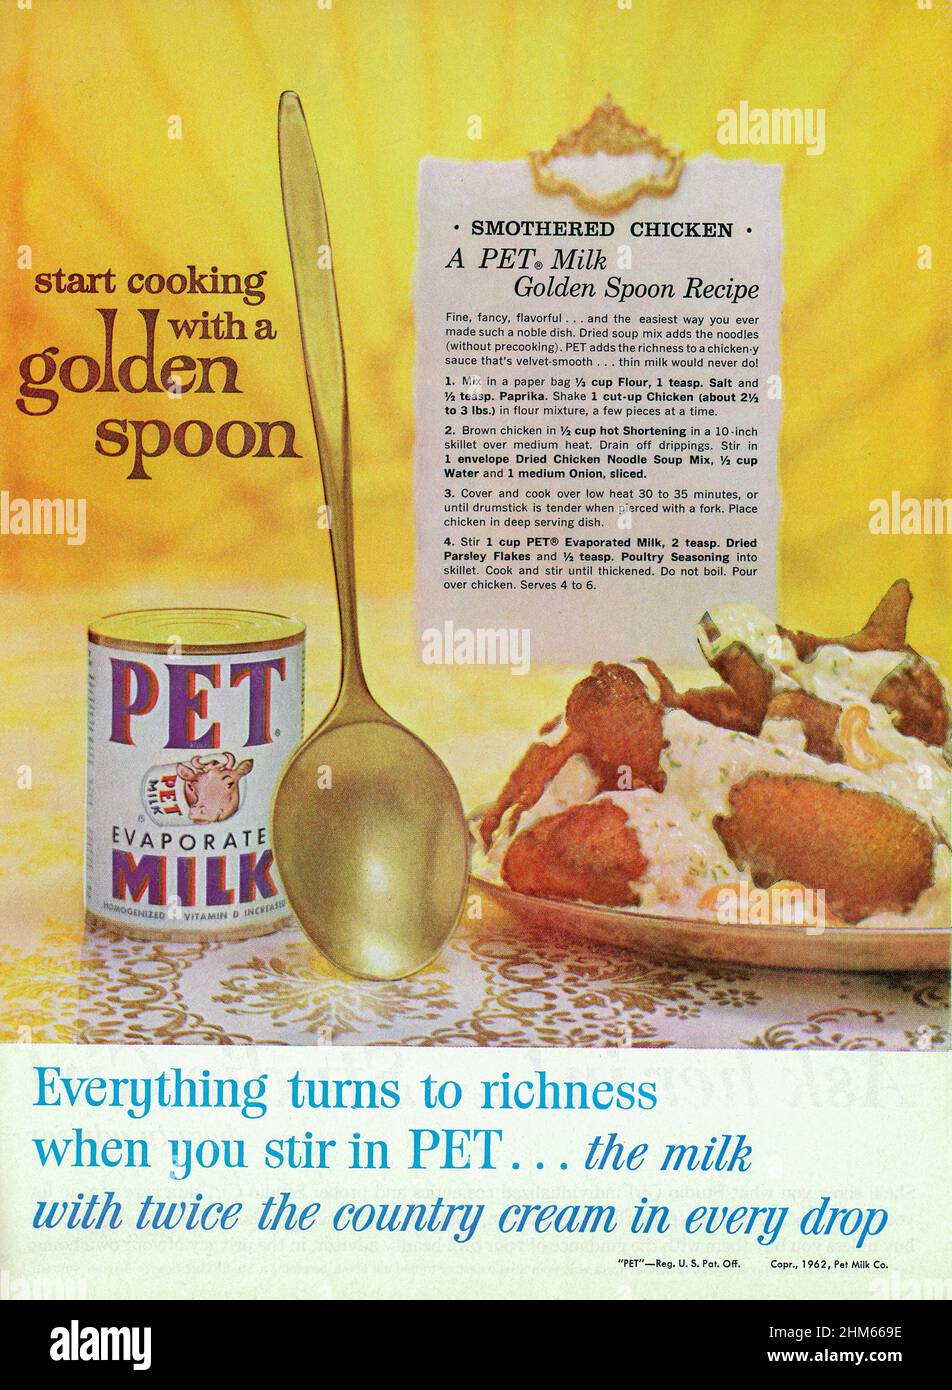 Vintage September 1962 'Good Housekeeping' magazine advert, USA Stock Photo